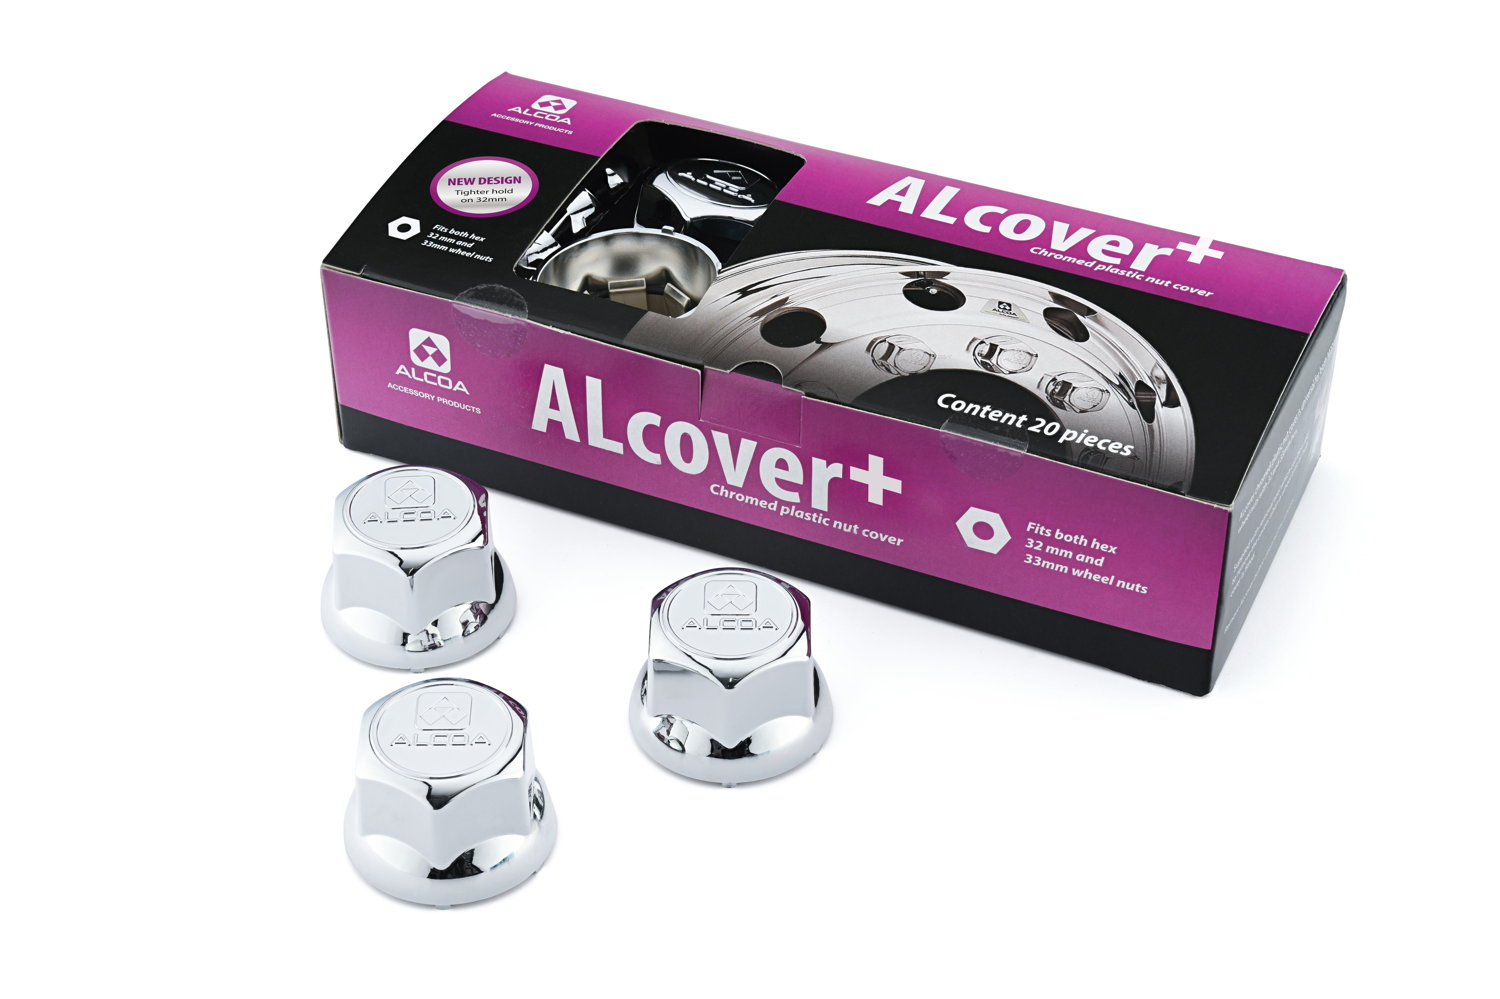 Alcover+_box_and_Alcover+_3pc